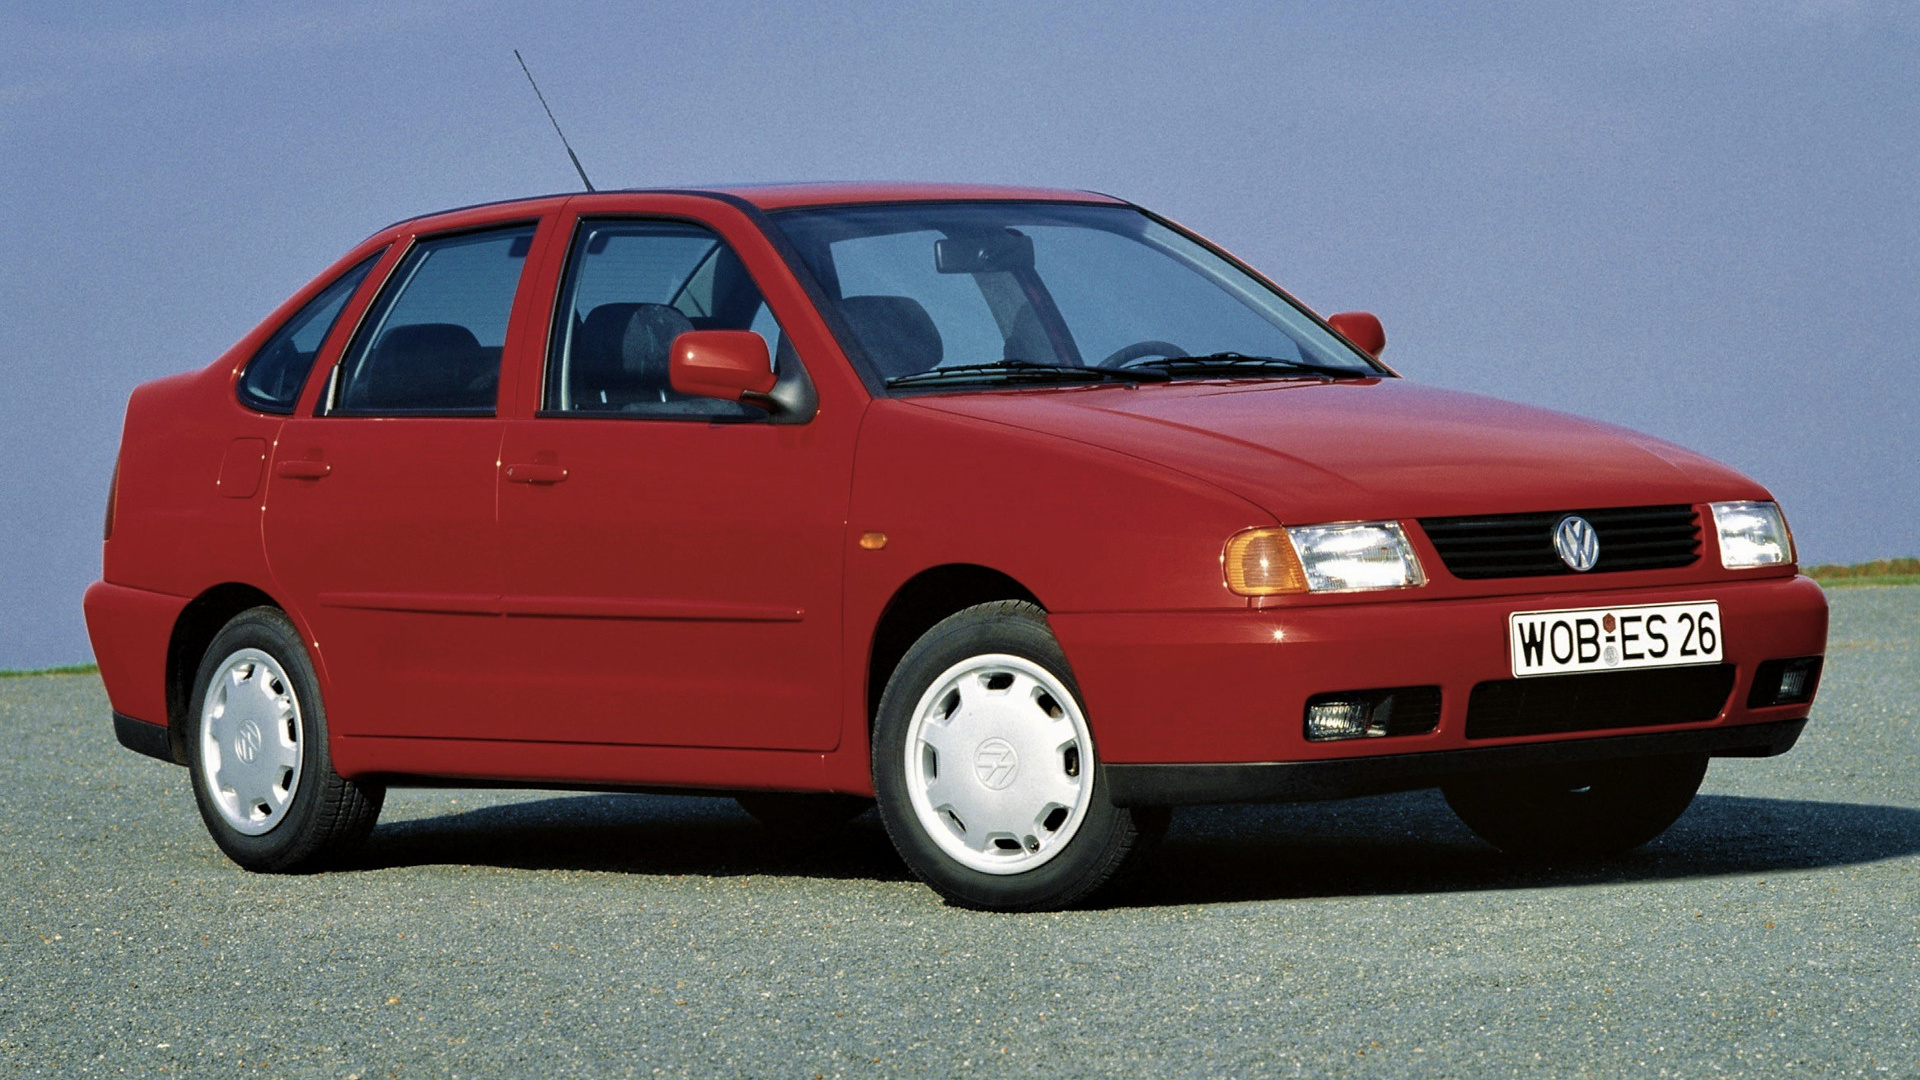 Classic 3.3. Volkswagen Polo Classic III 1.6. Volkswagen Polo 1996 Classics. Фольксваген поло Классик 1996 седан. Volkswagen Polo, III, 1994 — 2002.